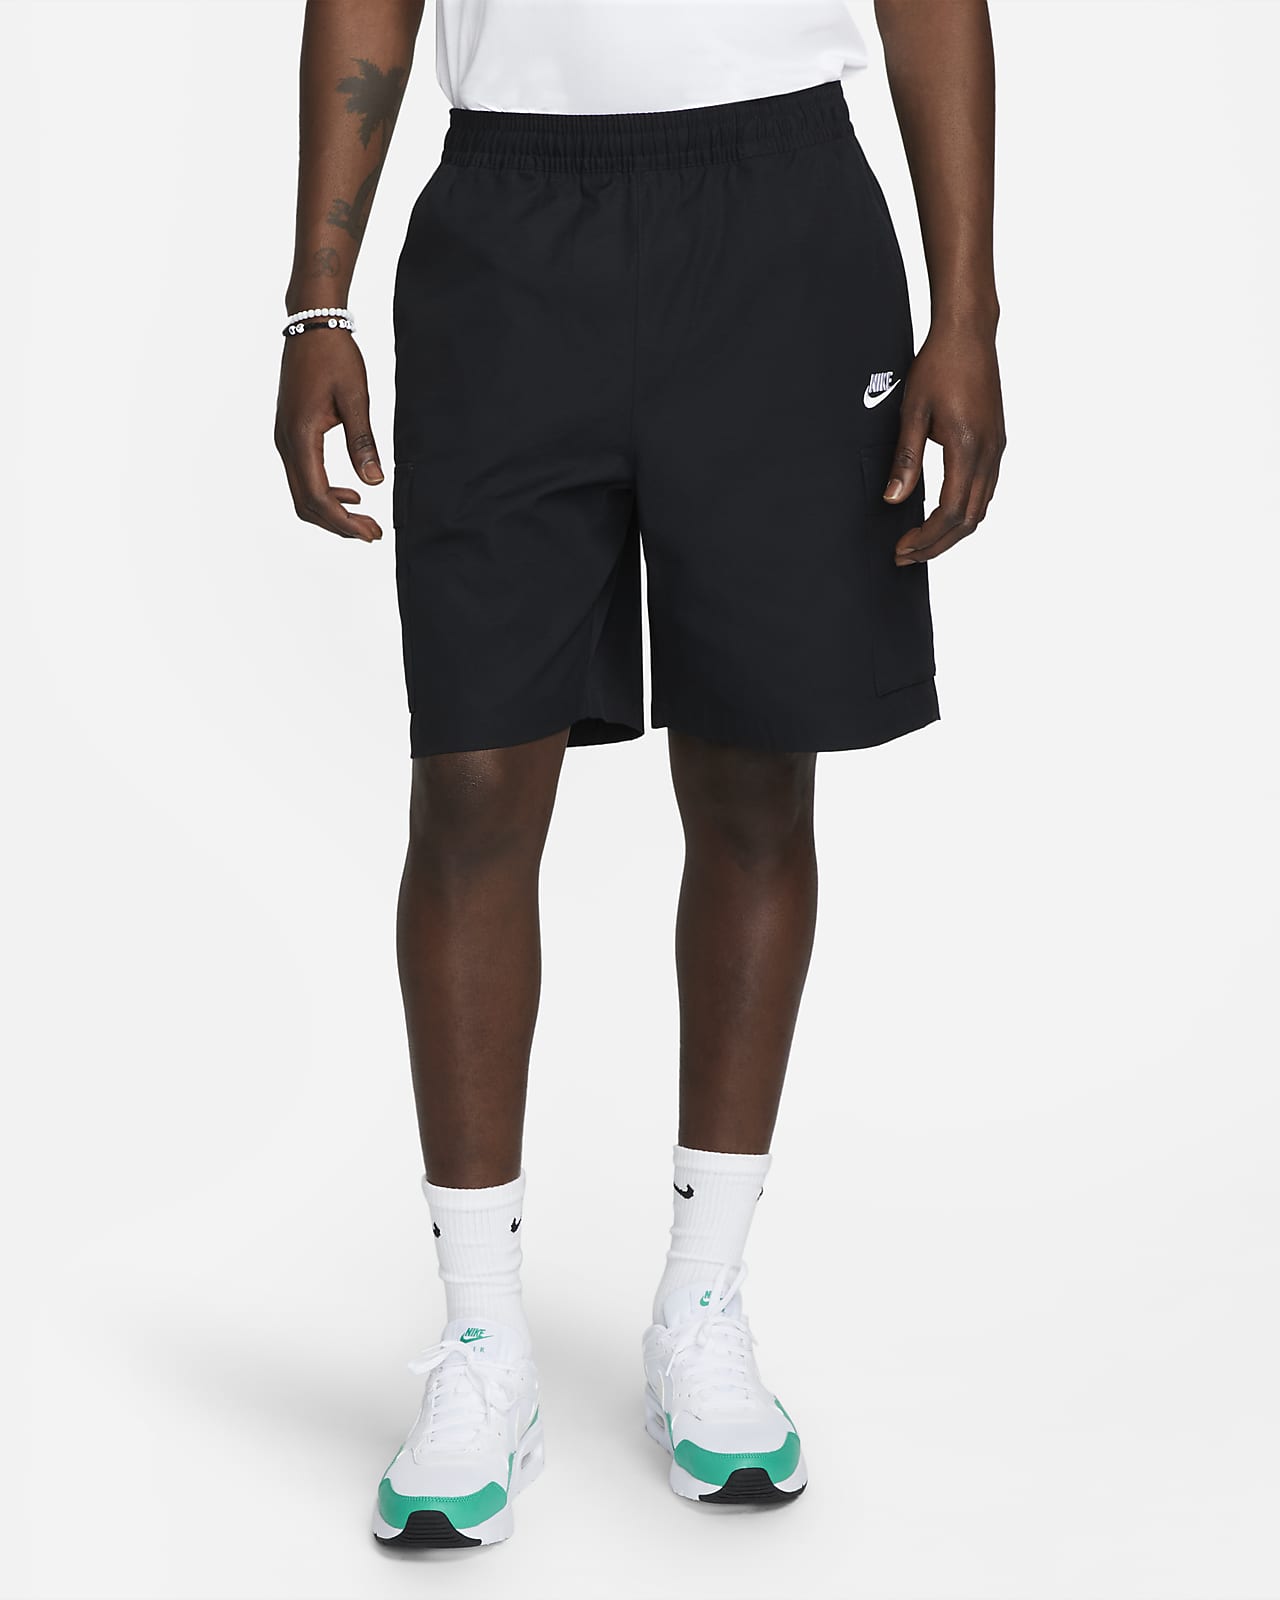 Custom Nike Flex Woven Shorts with Pockets